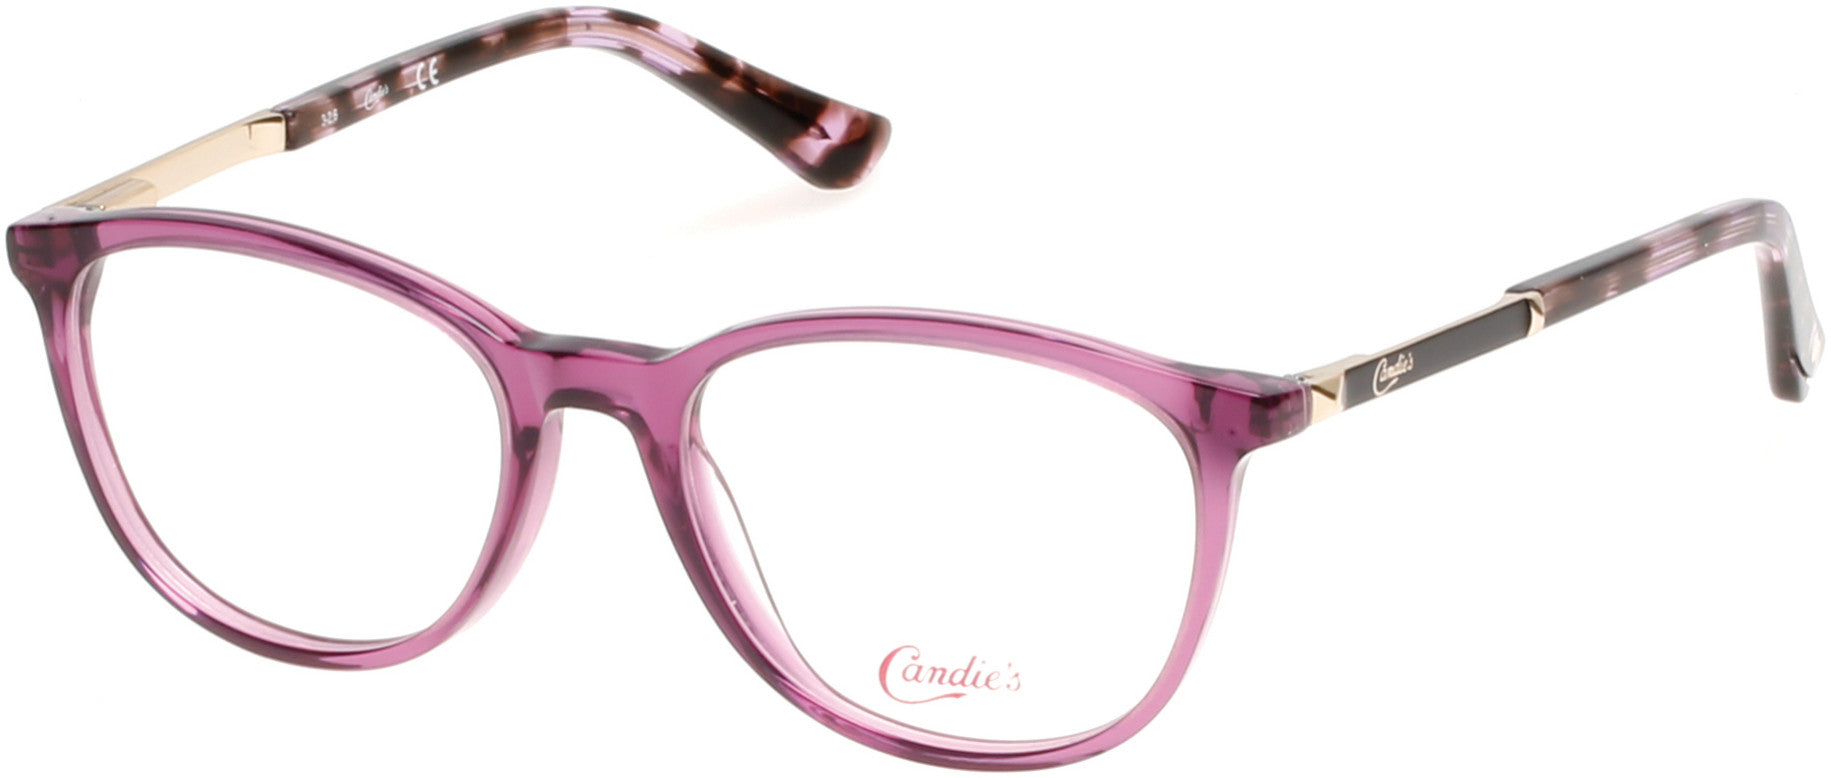 Candies CA0503 Eyeglasses 080-080 - Lilac